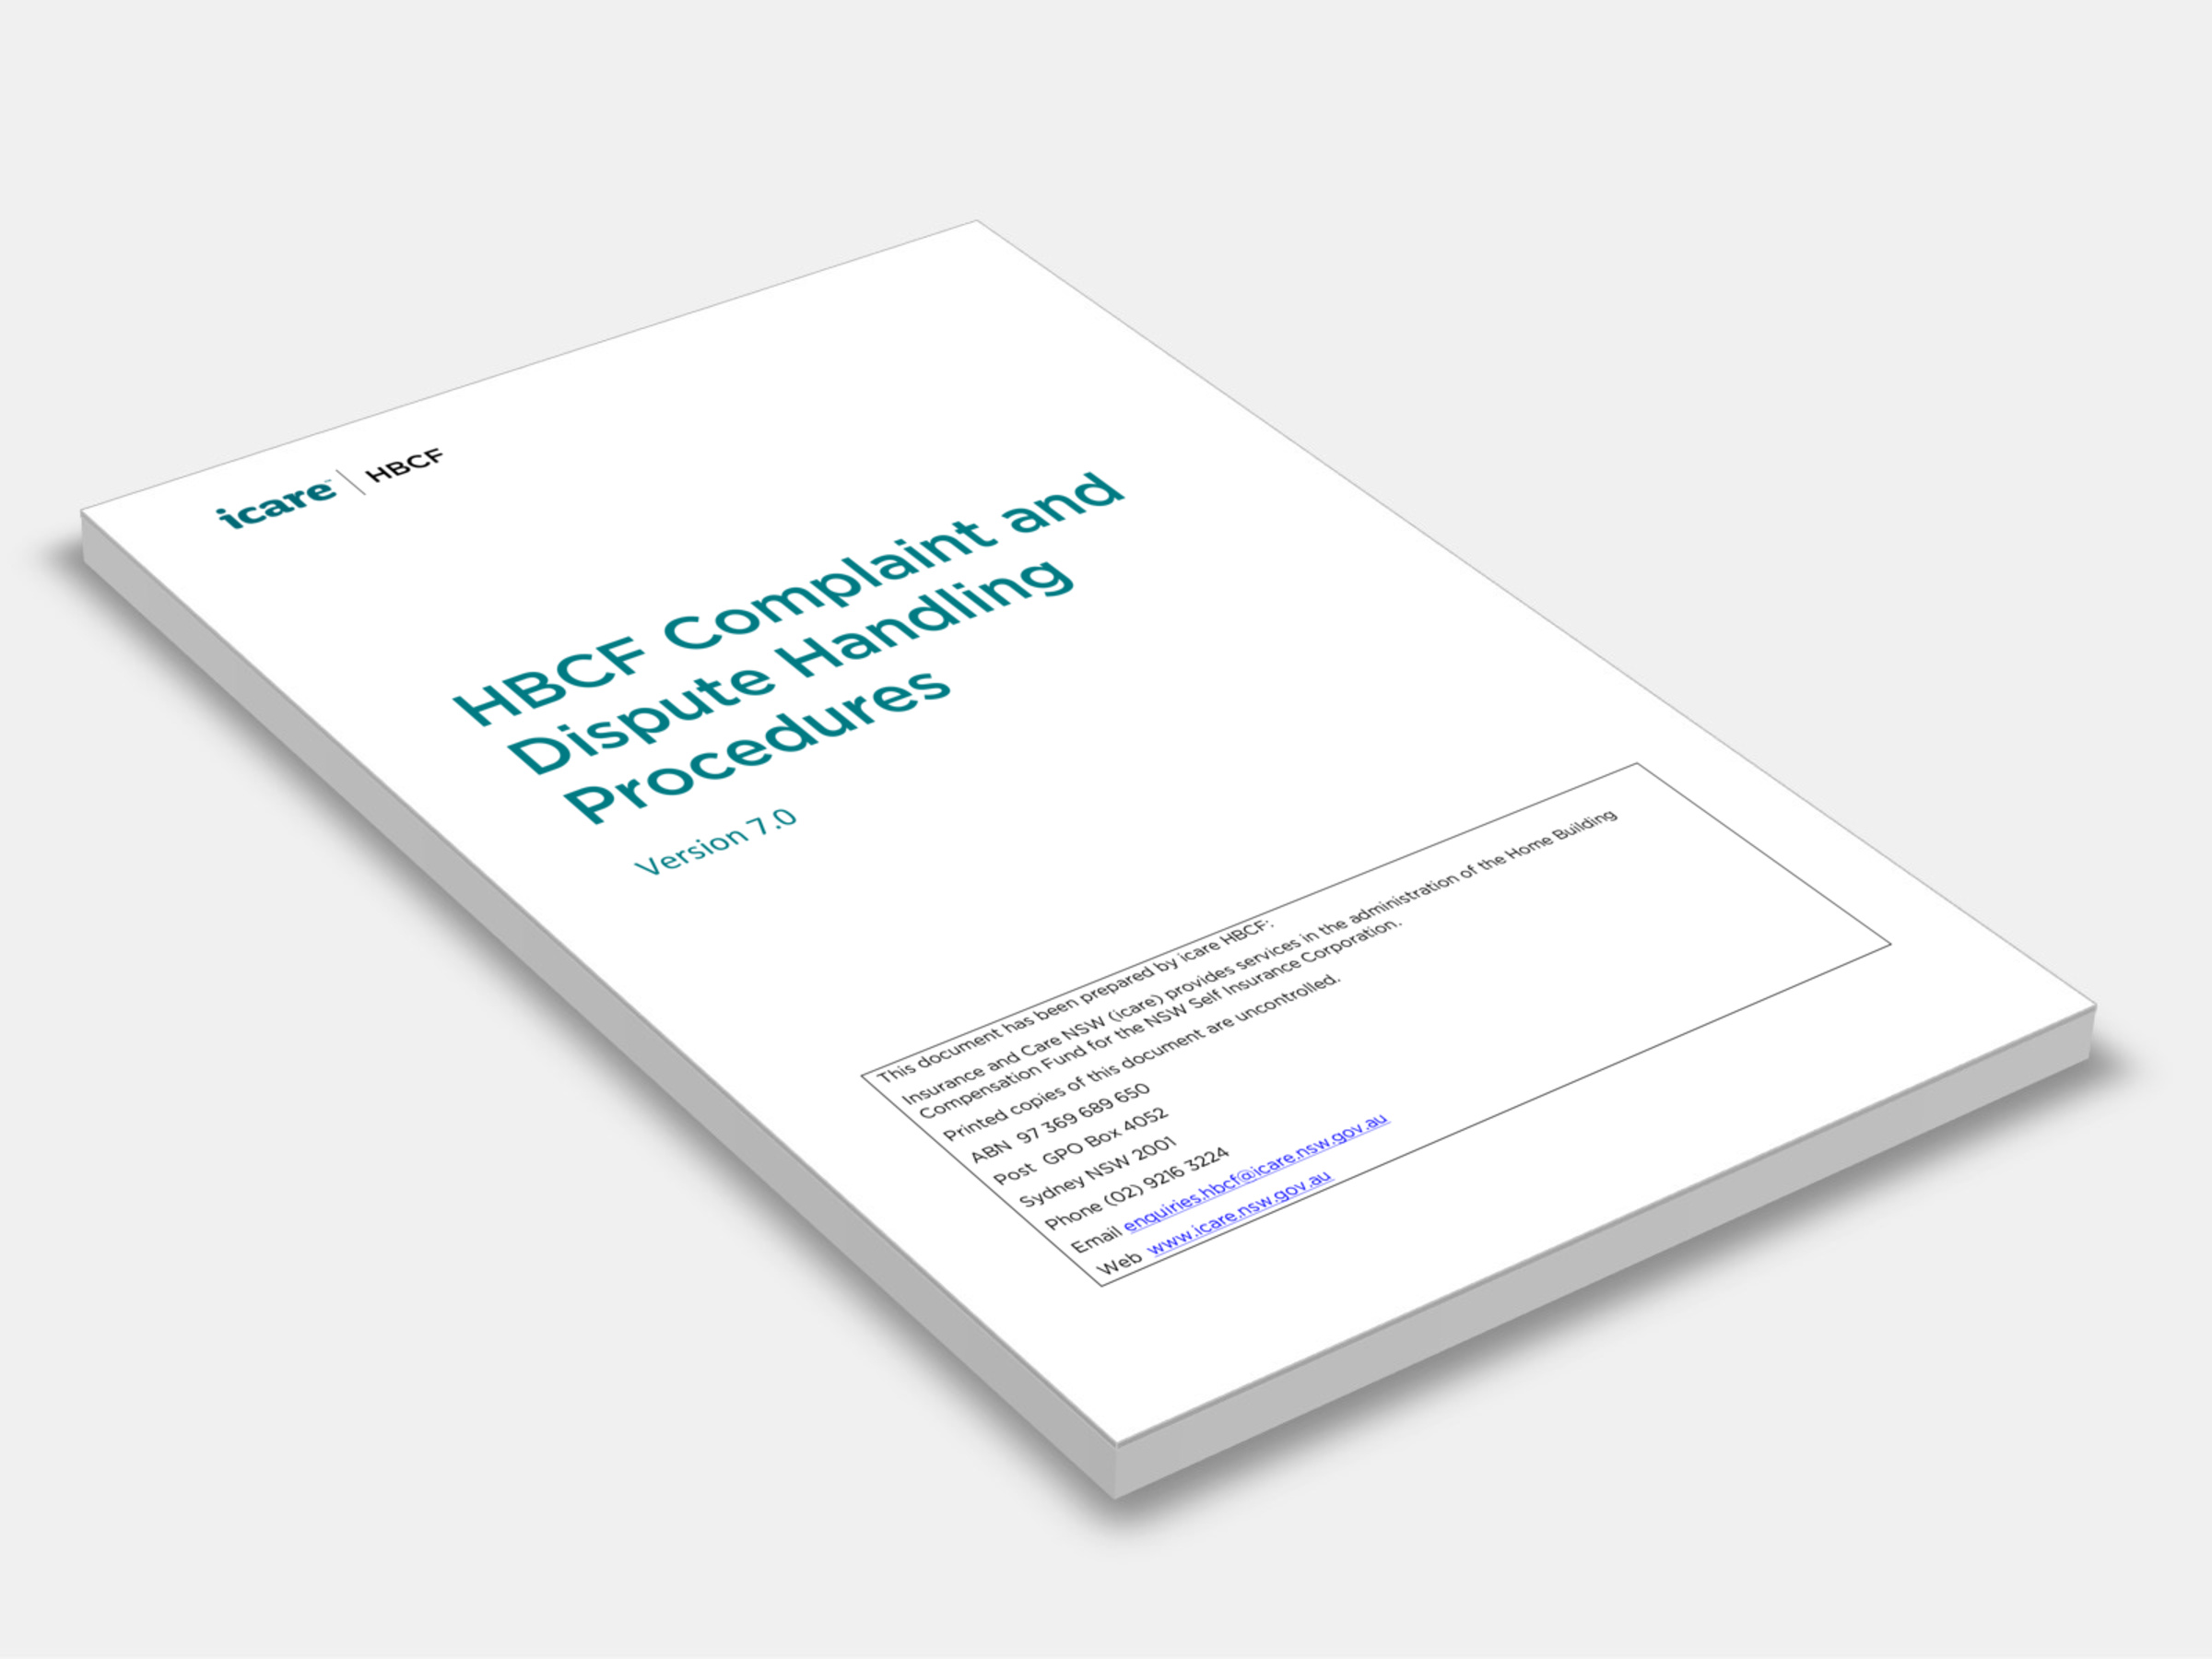 HBCF Complaint and Dispute Handling Procedures cover 2021